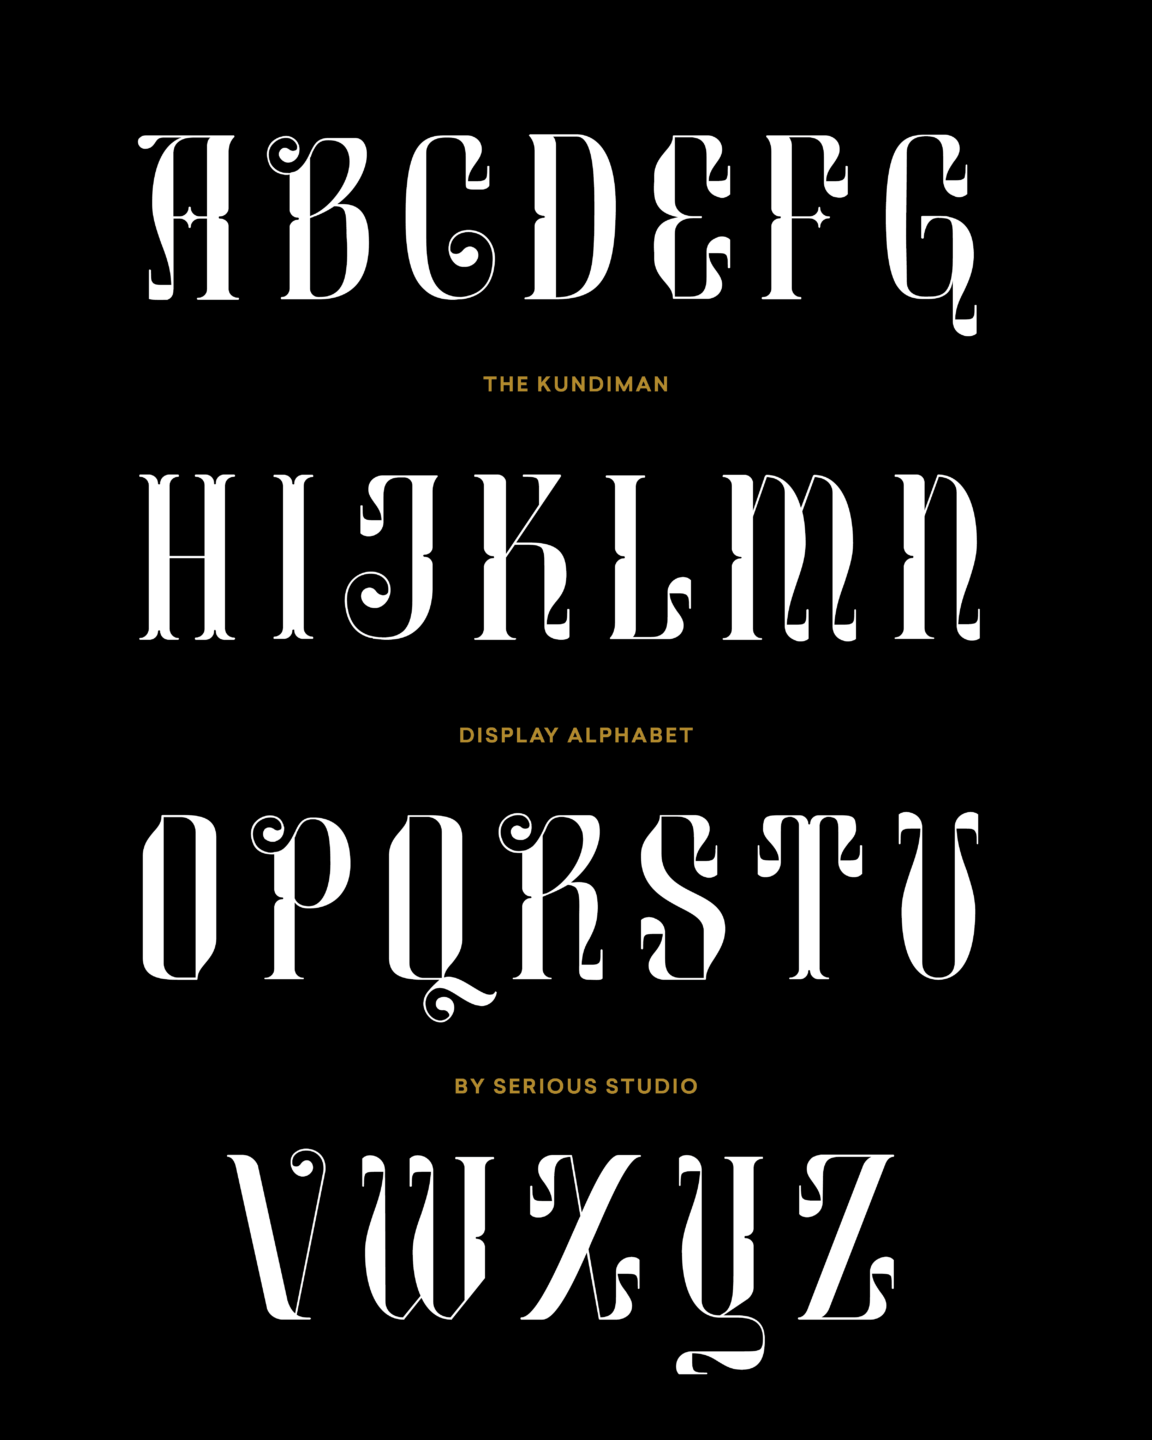 Display alphabet of the custom Filipino typeface Kundiman